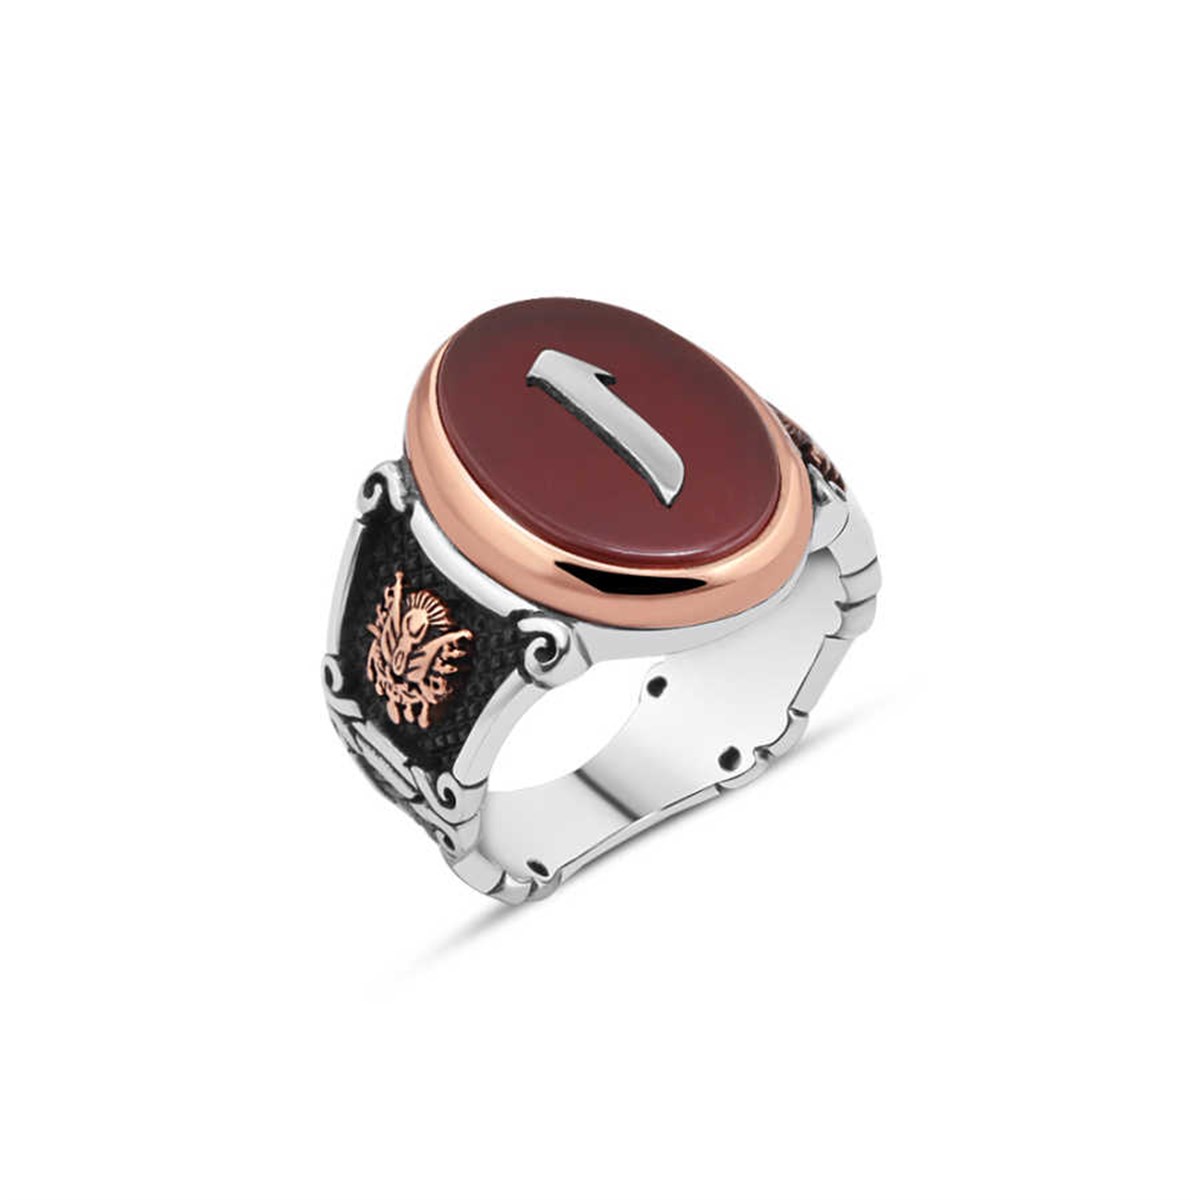 Elif Written Silver Men's Ring on Agate Stone